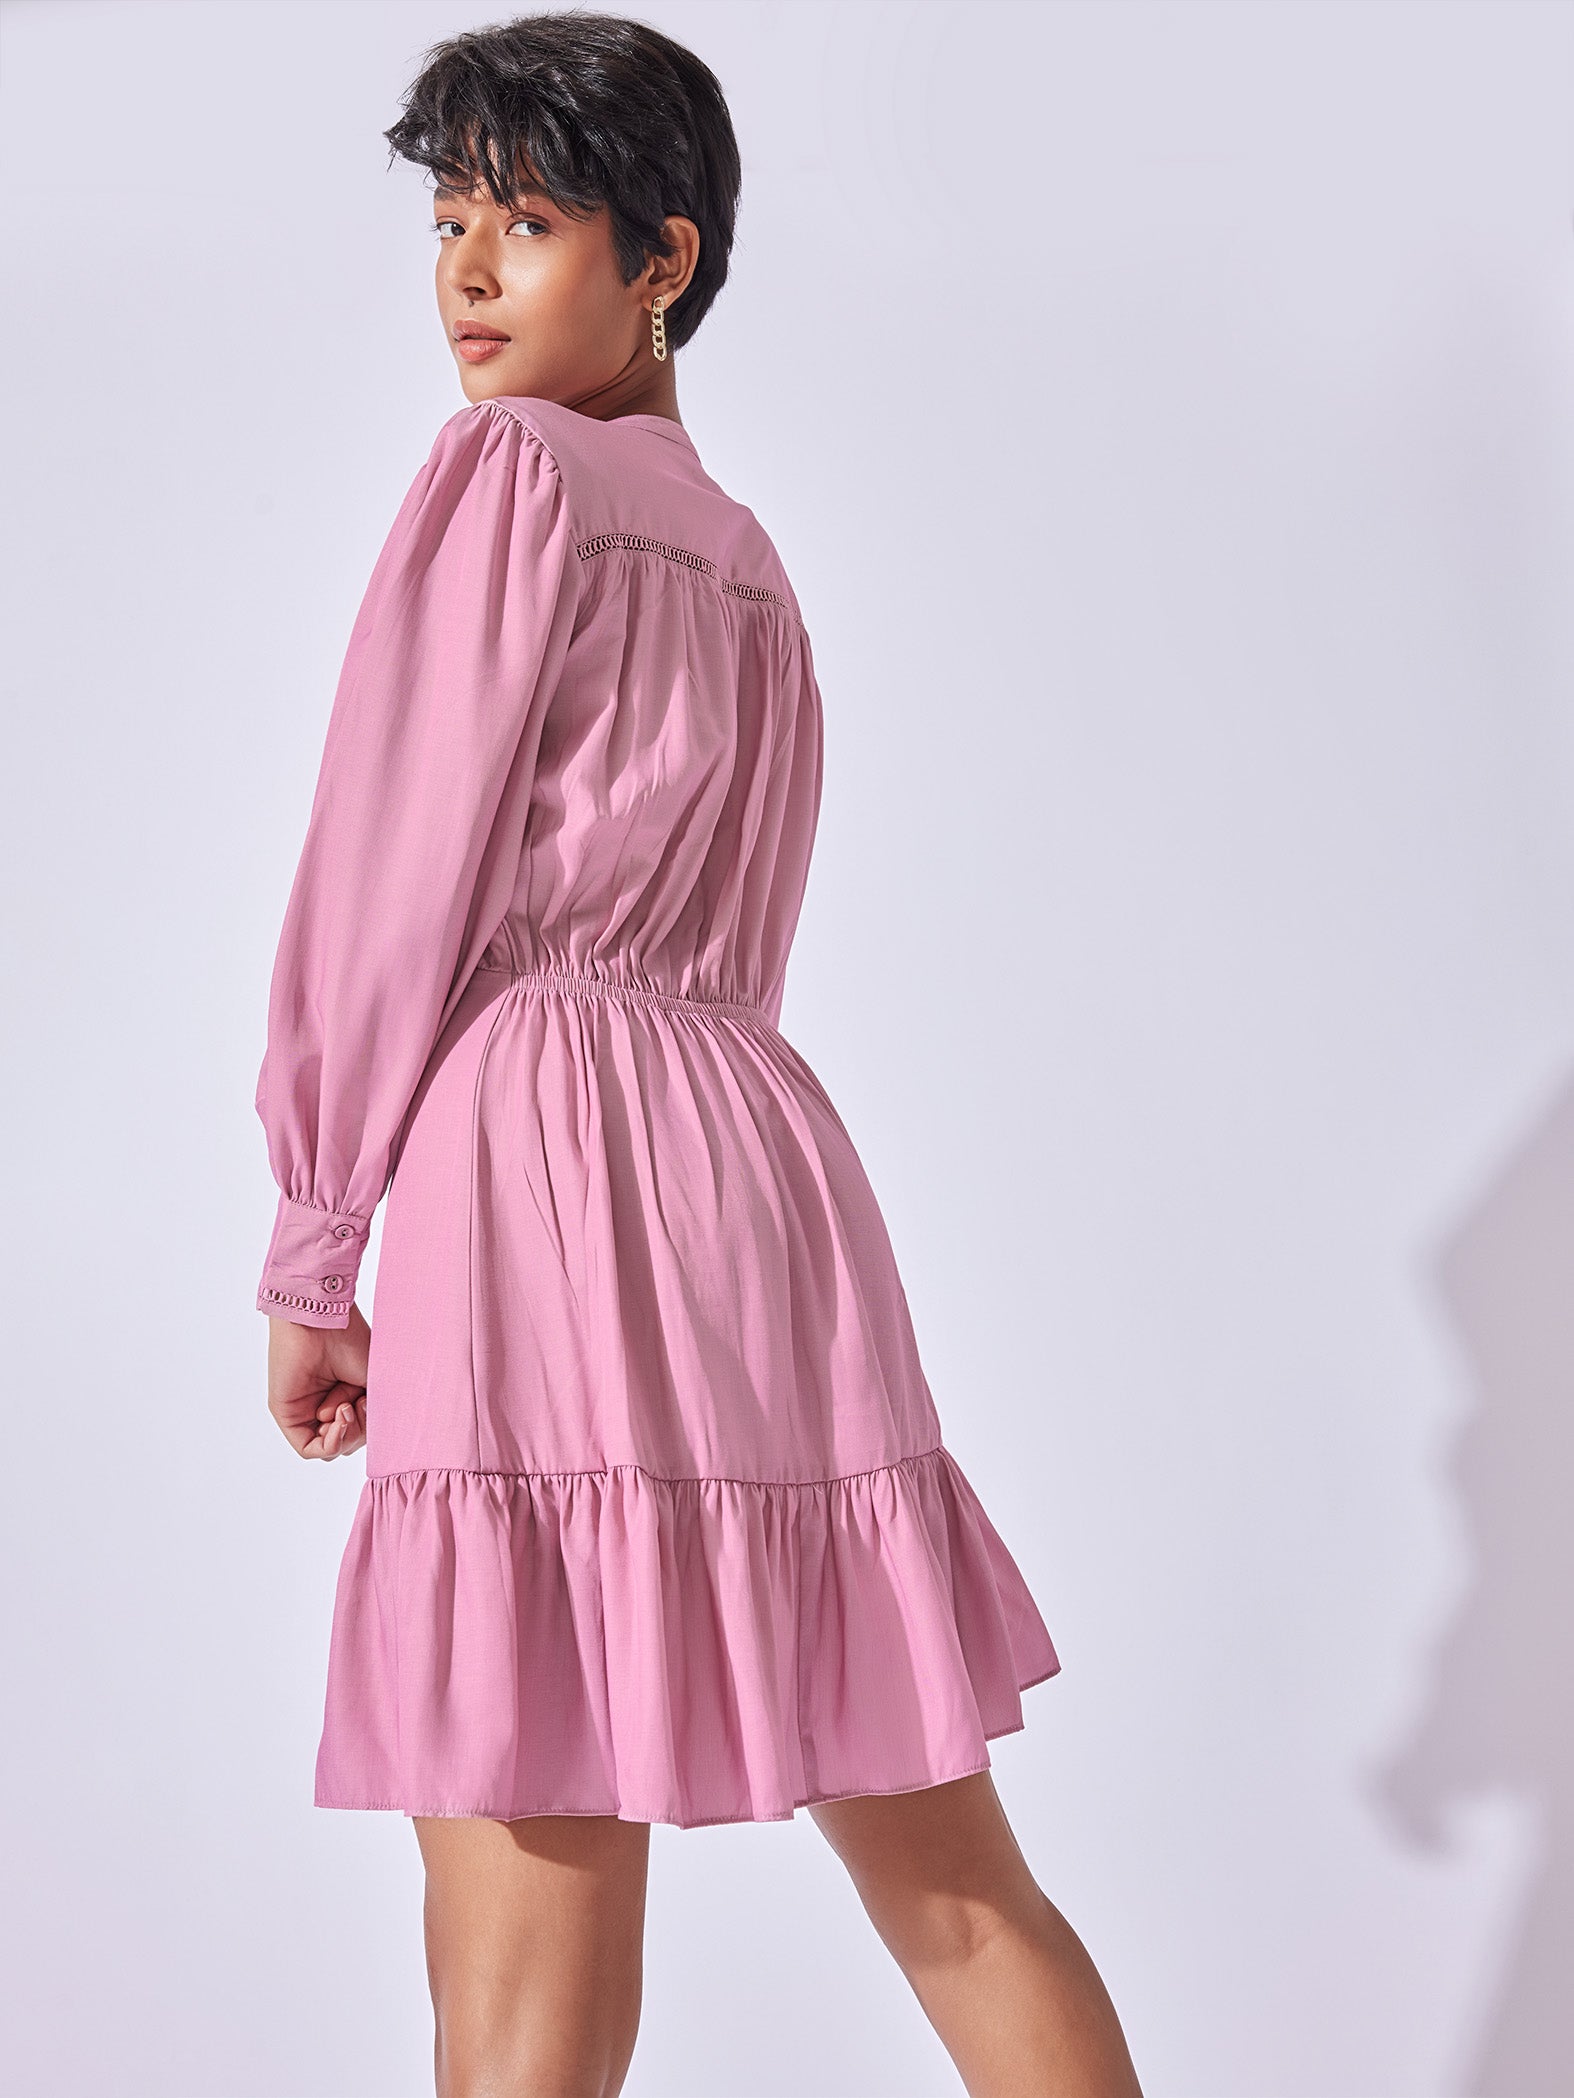 Bubblegum Lace Insert Dress